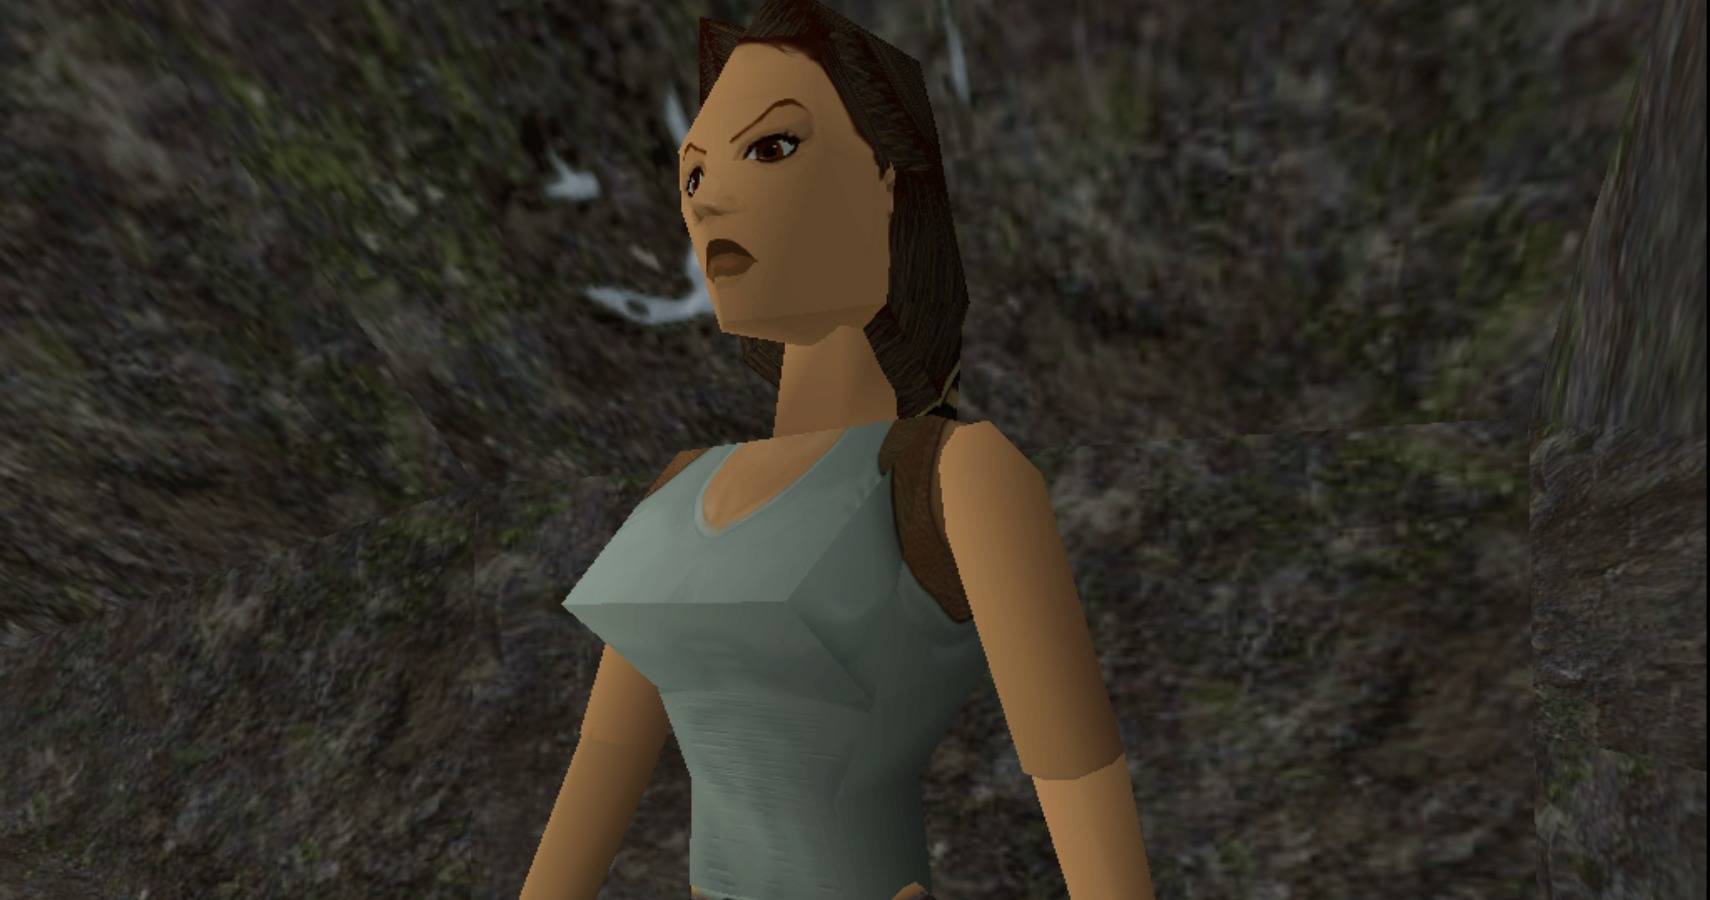 Lara croft triangle chest